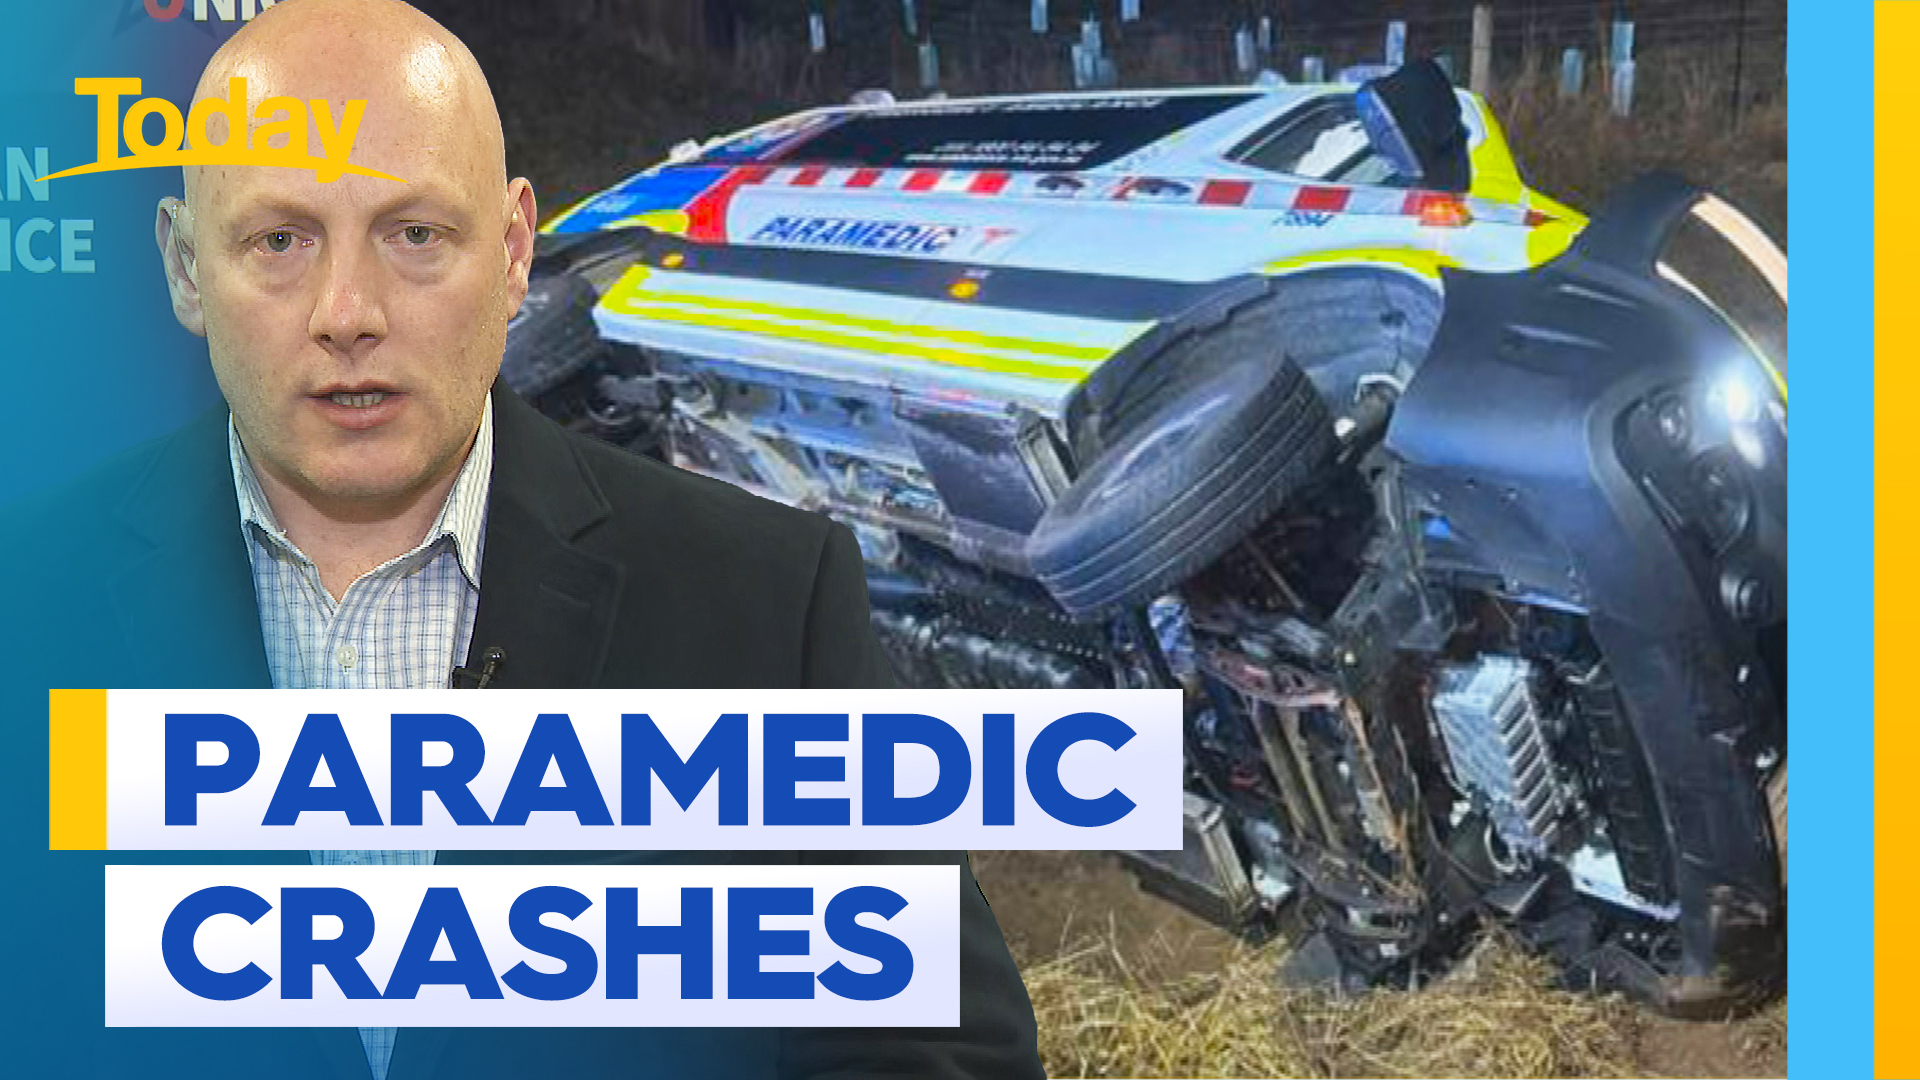 Paramedic crashes ambulance after working 18.5hr shift